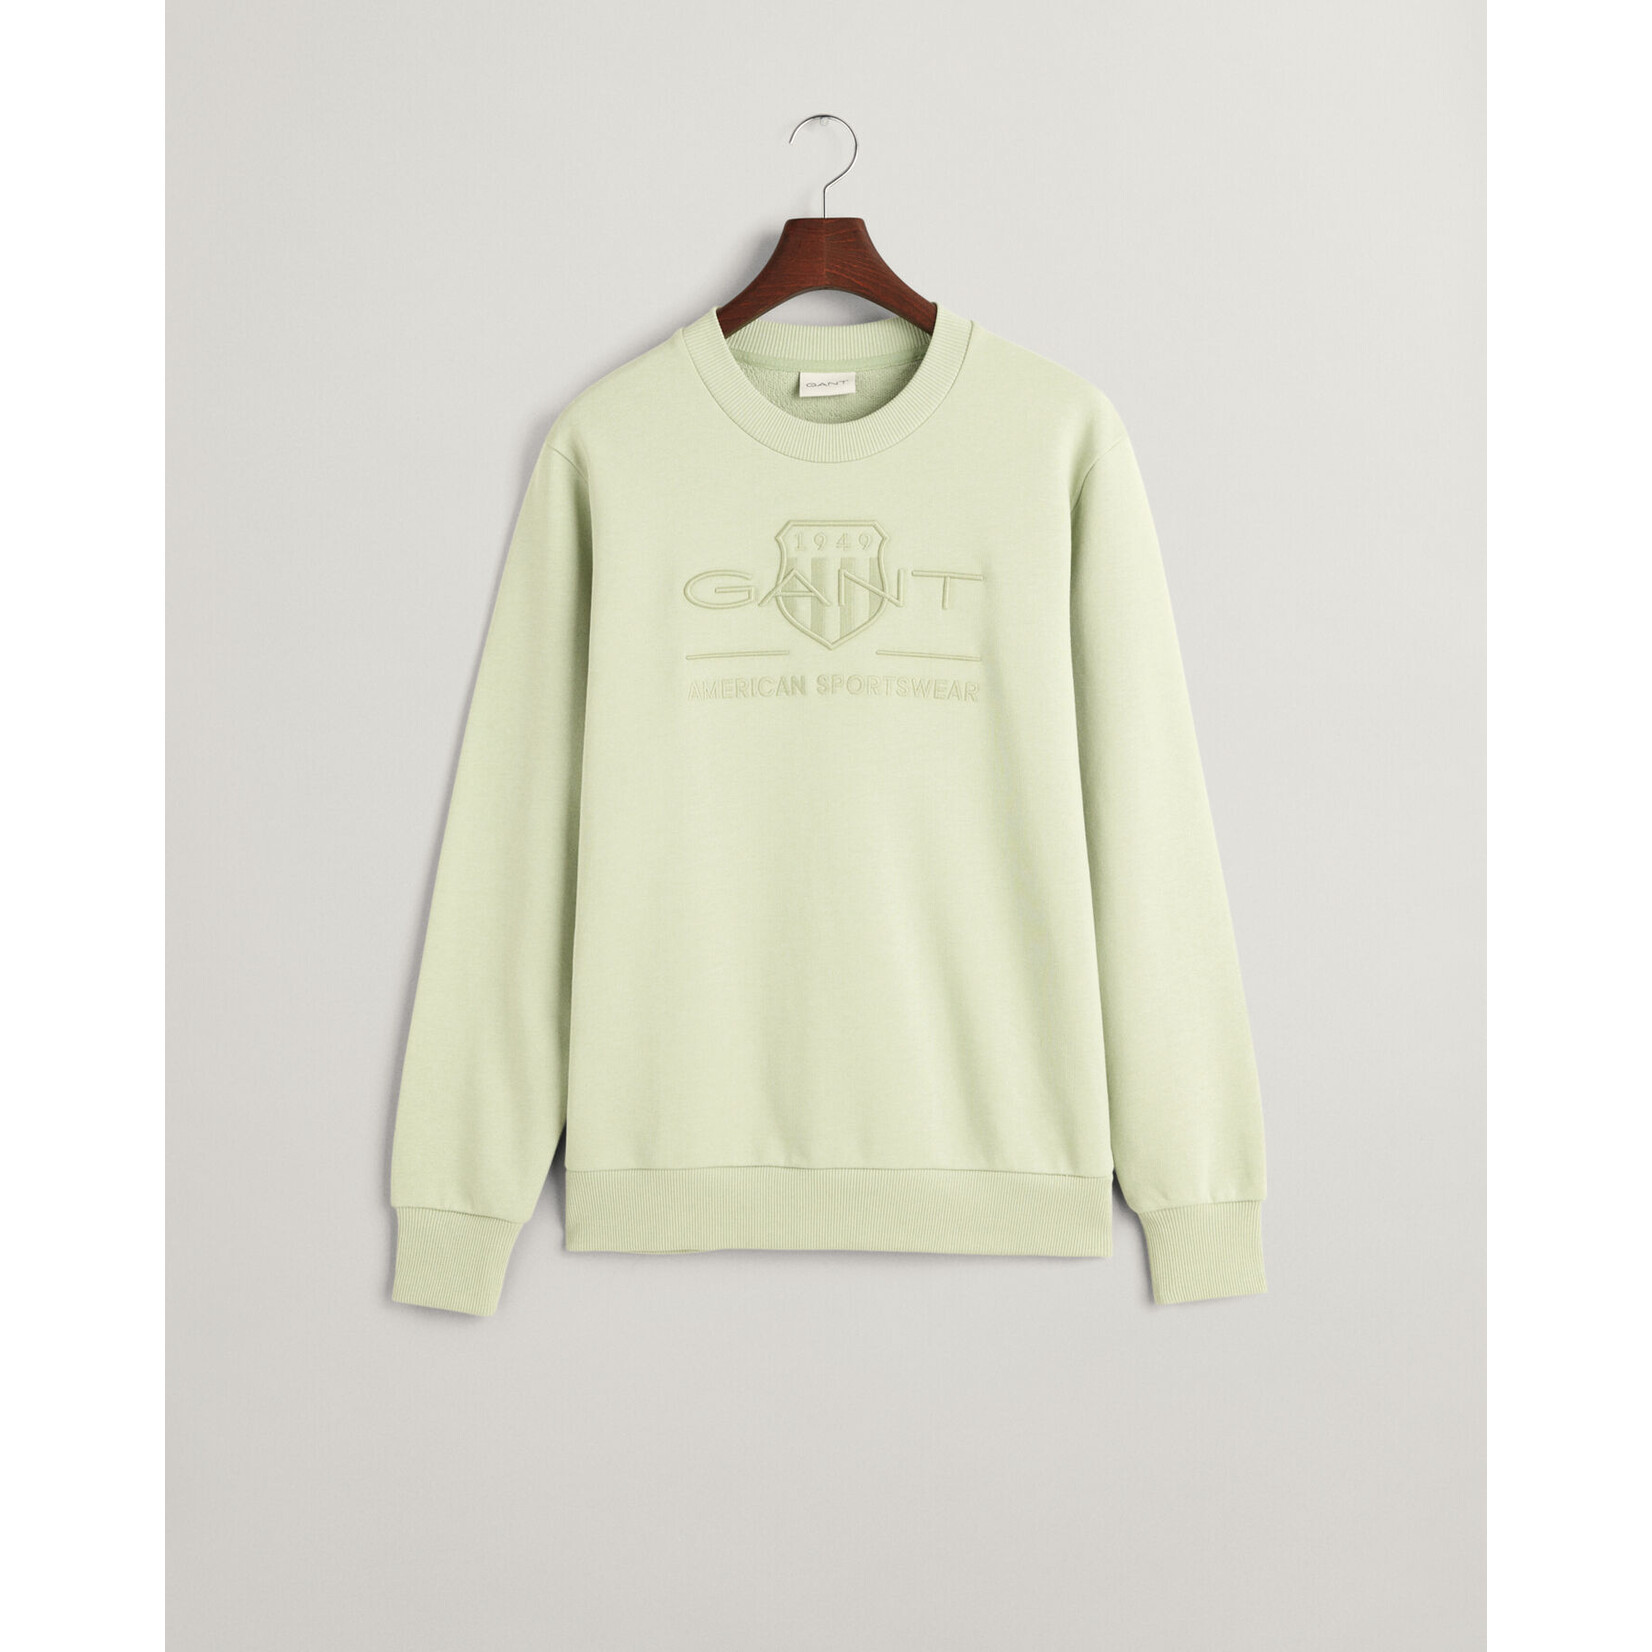 GANT tonal shield sweater matcha groen